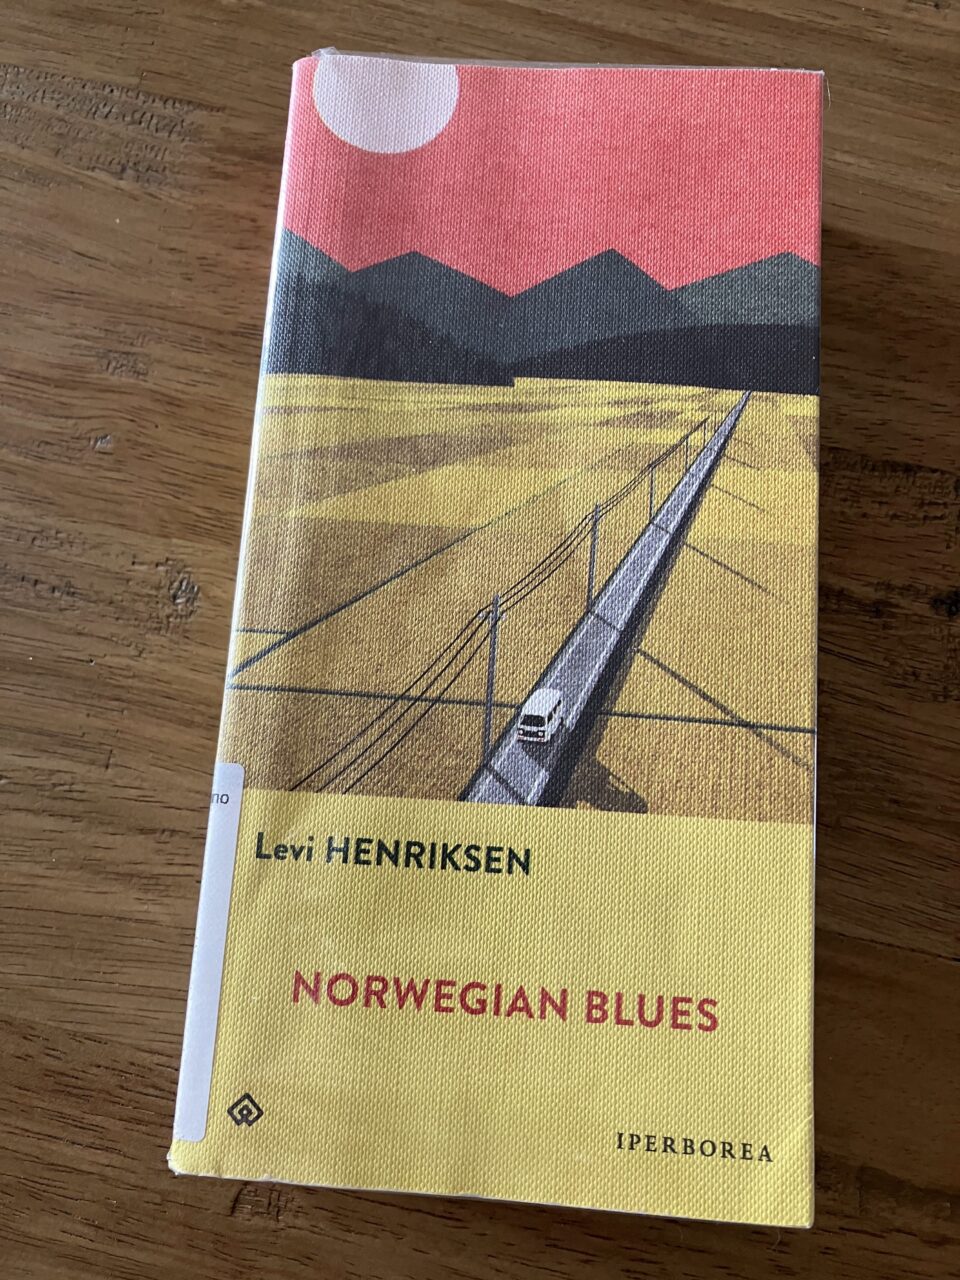 Norwegian blues